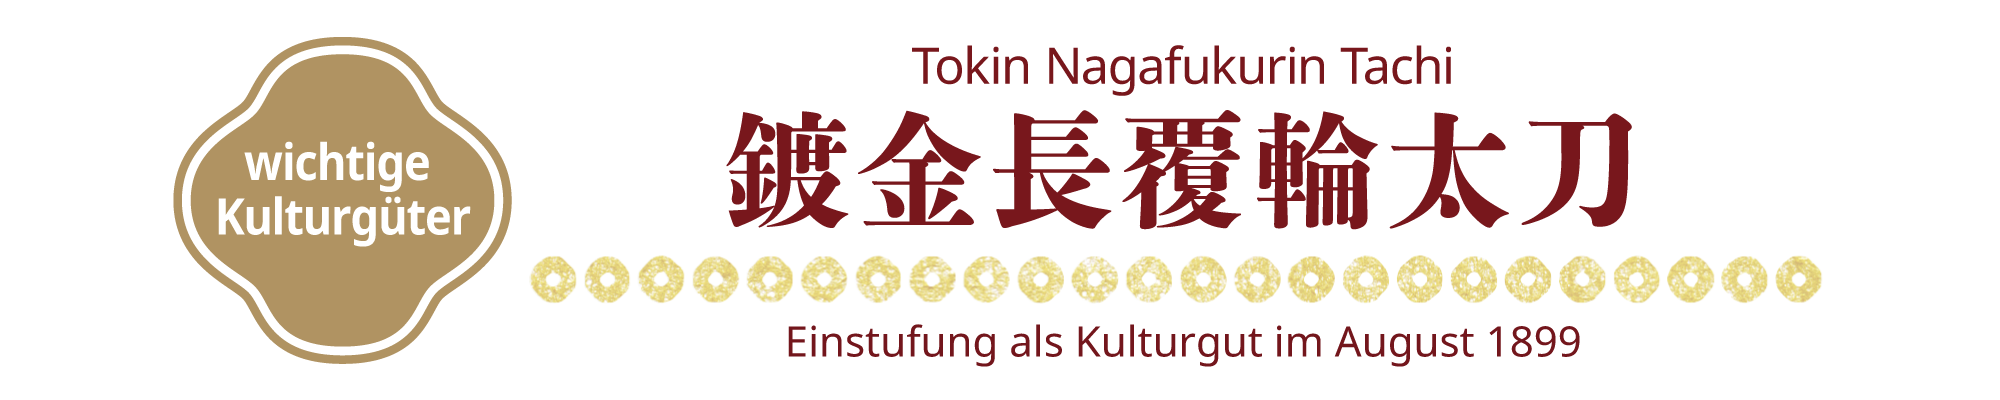 [wichtige Kulturgüter]Tokin Nagafukurin Tachi, Einstufung als Kulturgut im August 1899